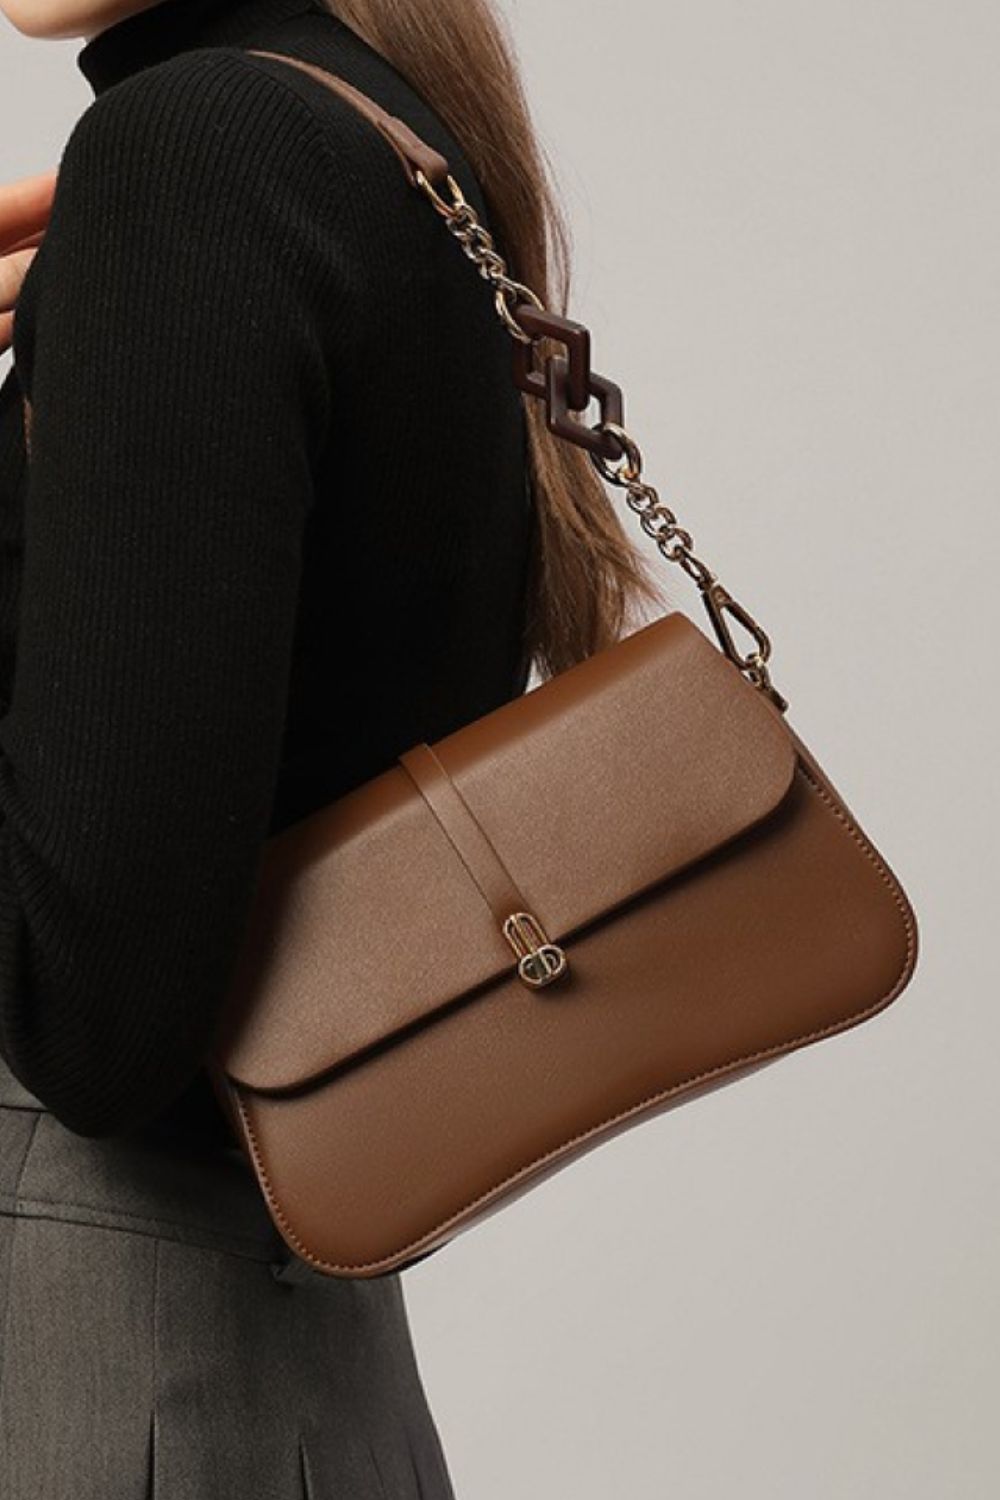 PU Leather Shoulder Bag - Chestnut / One Size Wynter 4 All Seasons